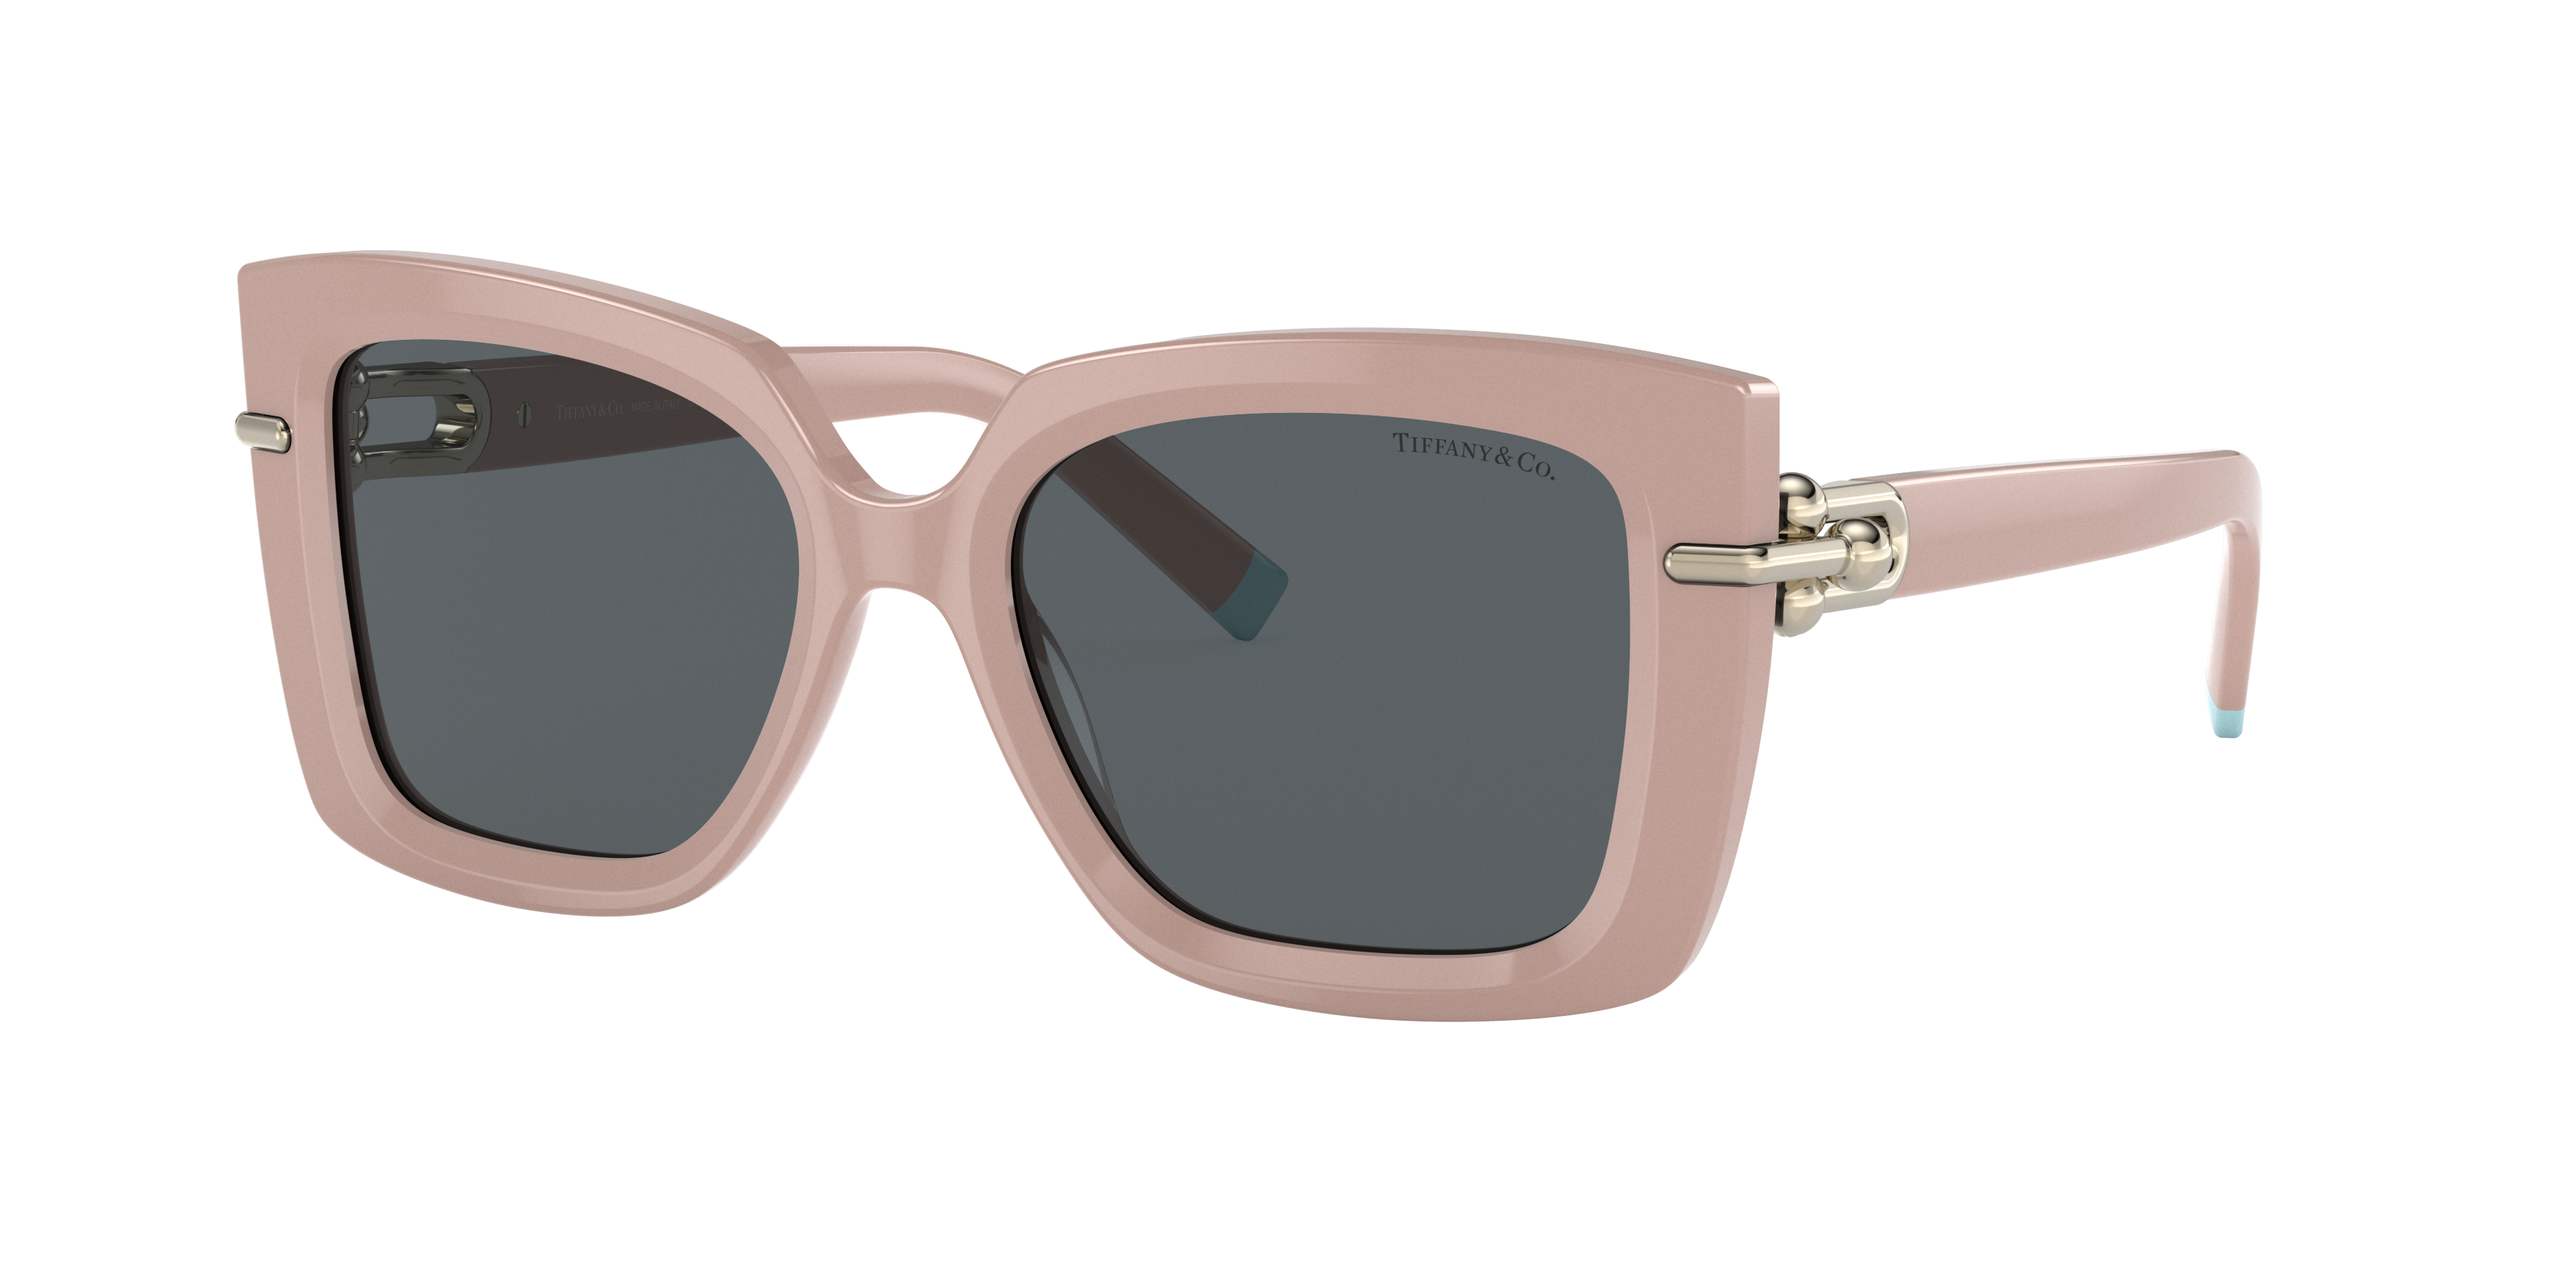 Tiffany & Co Tiffany Sunglasses In Dark Grey